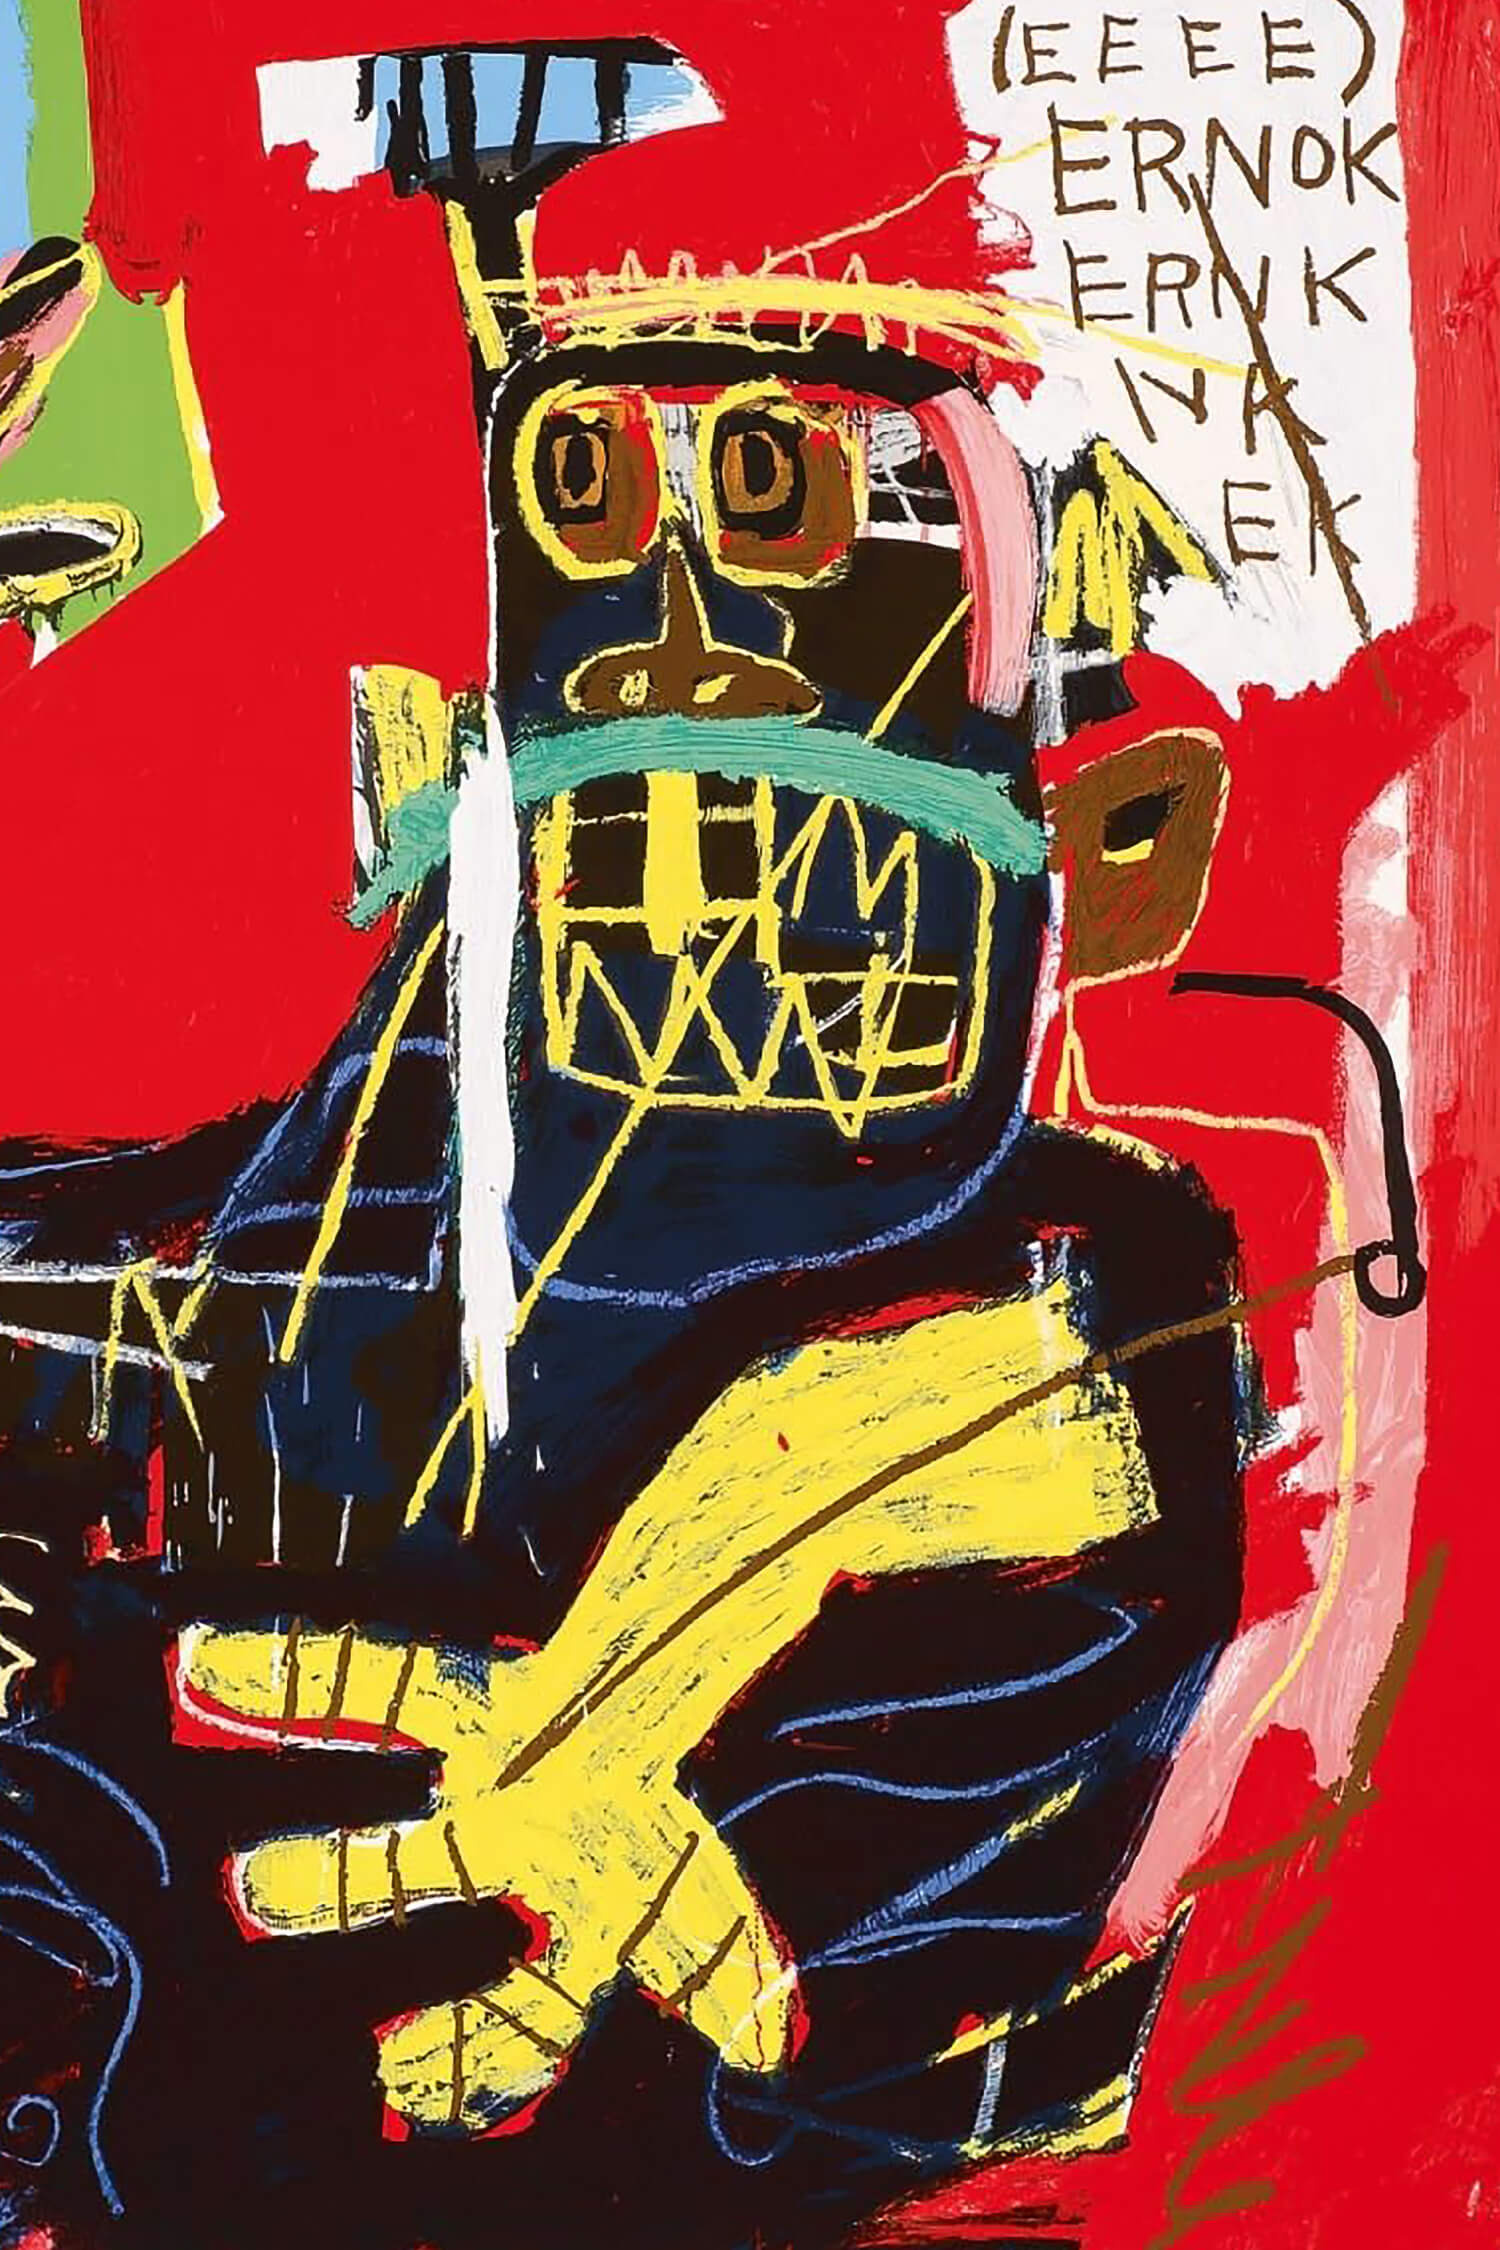 Jean-Michel Basquiat | Ernok